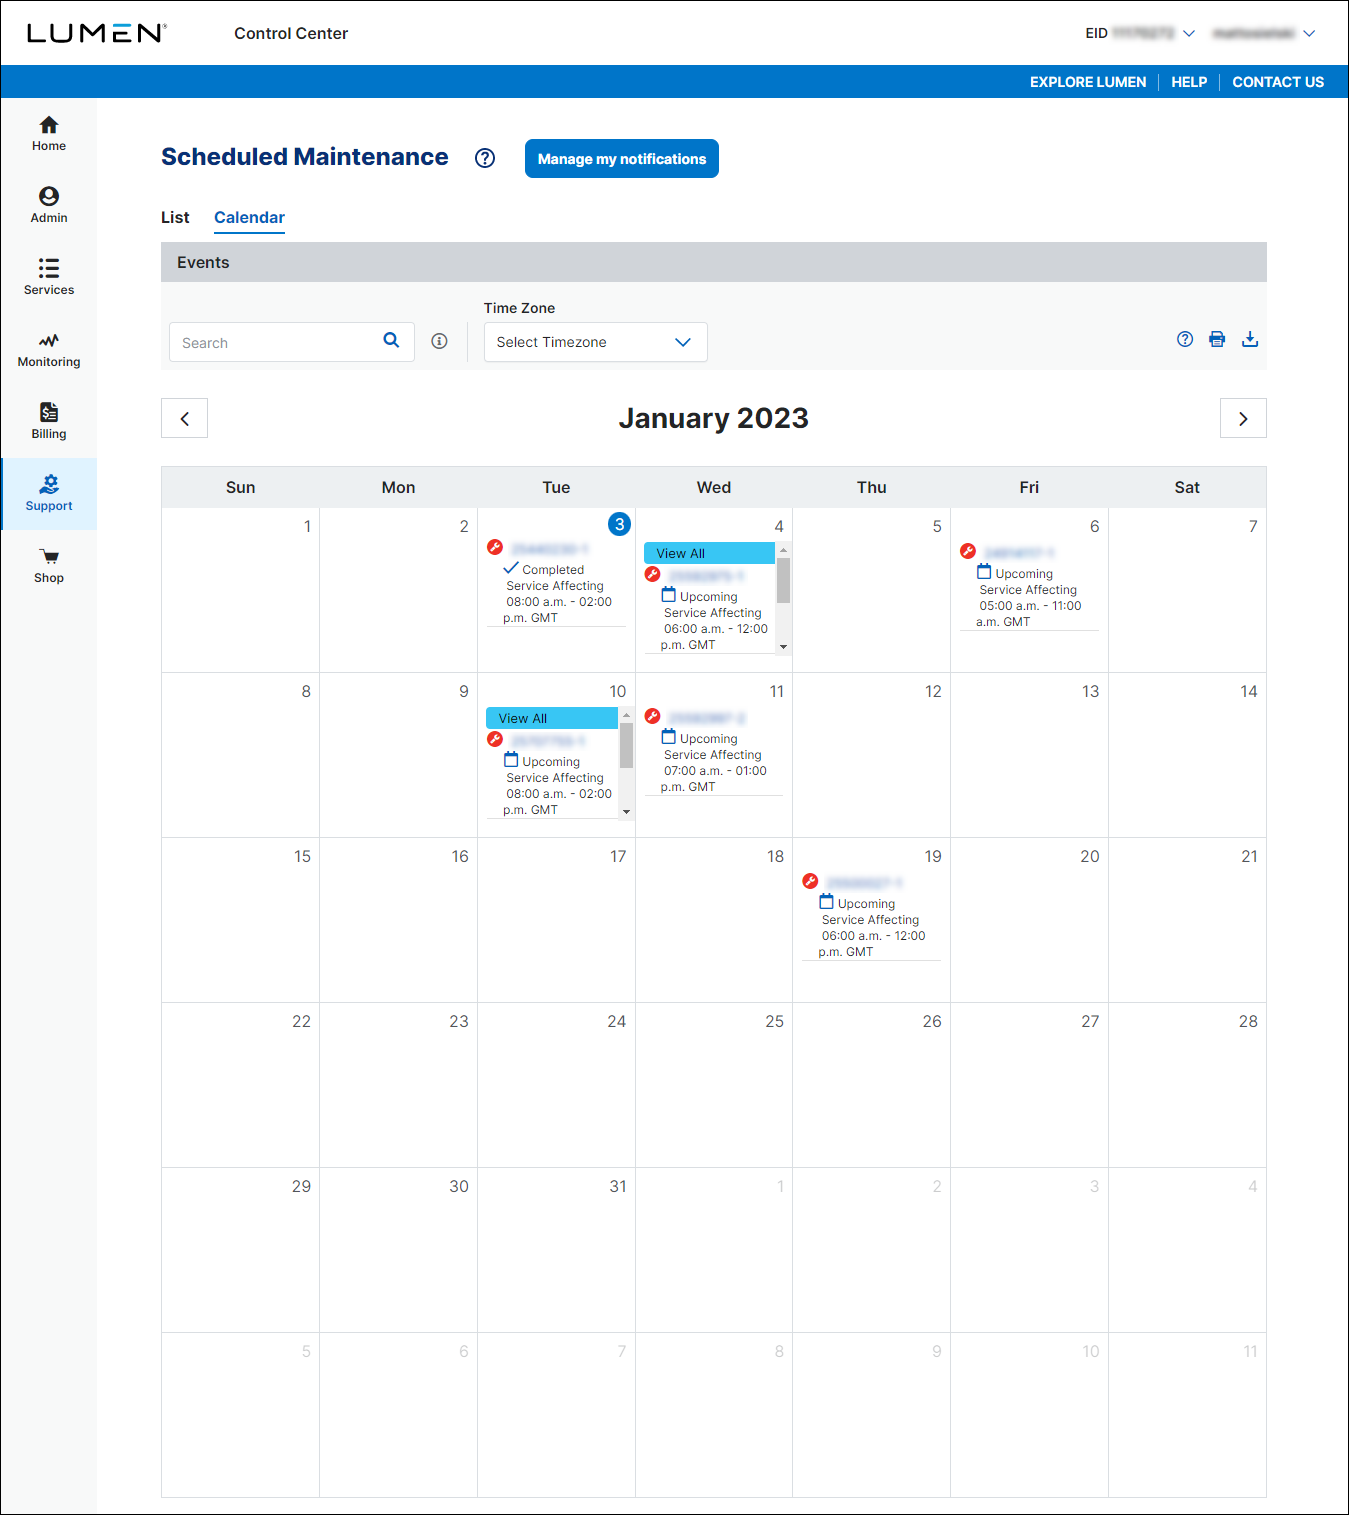 Scheduled Maintenance (showing calendar view)